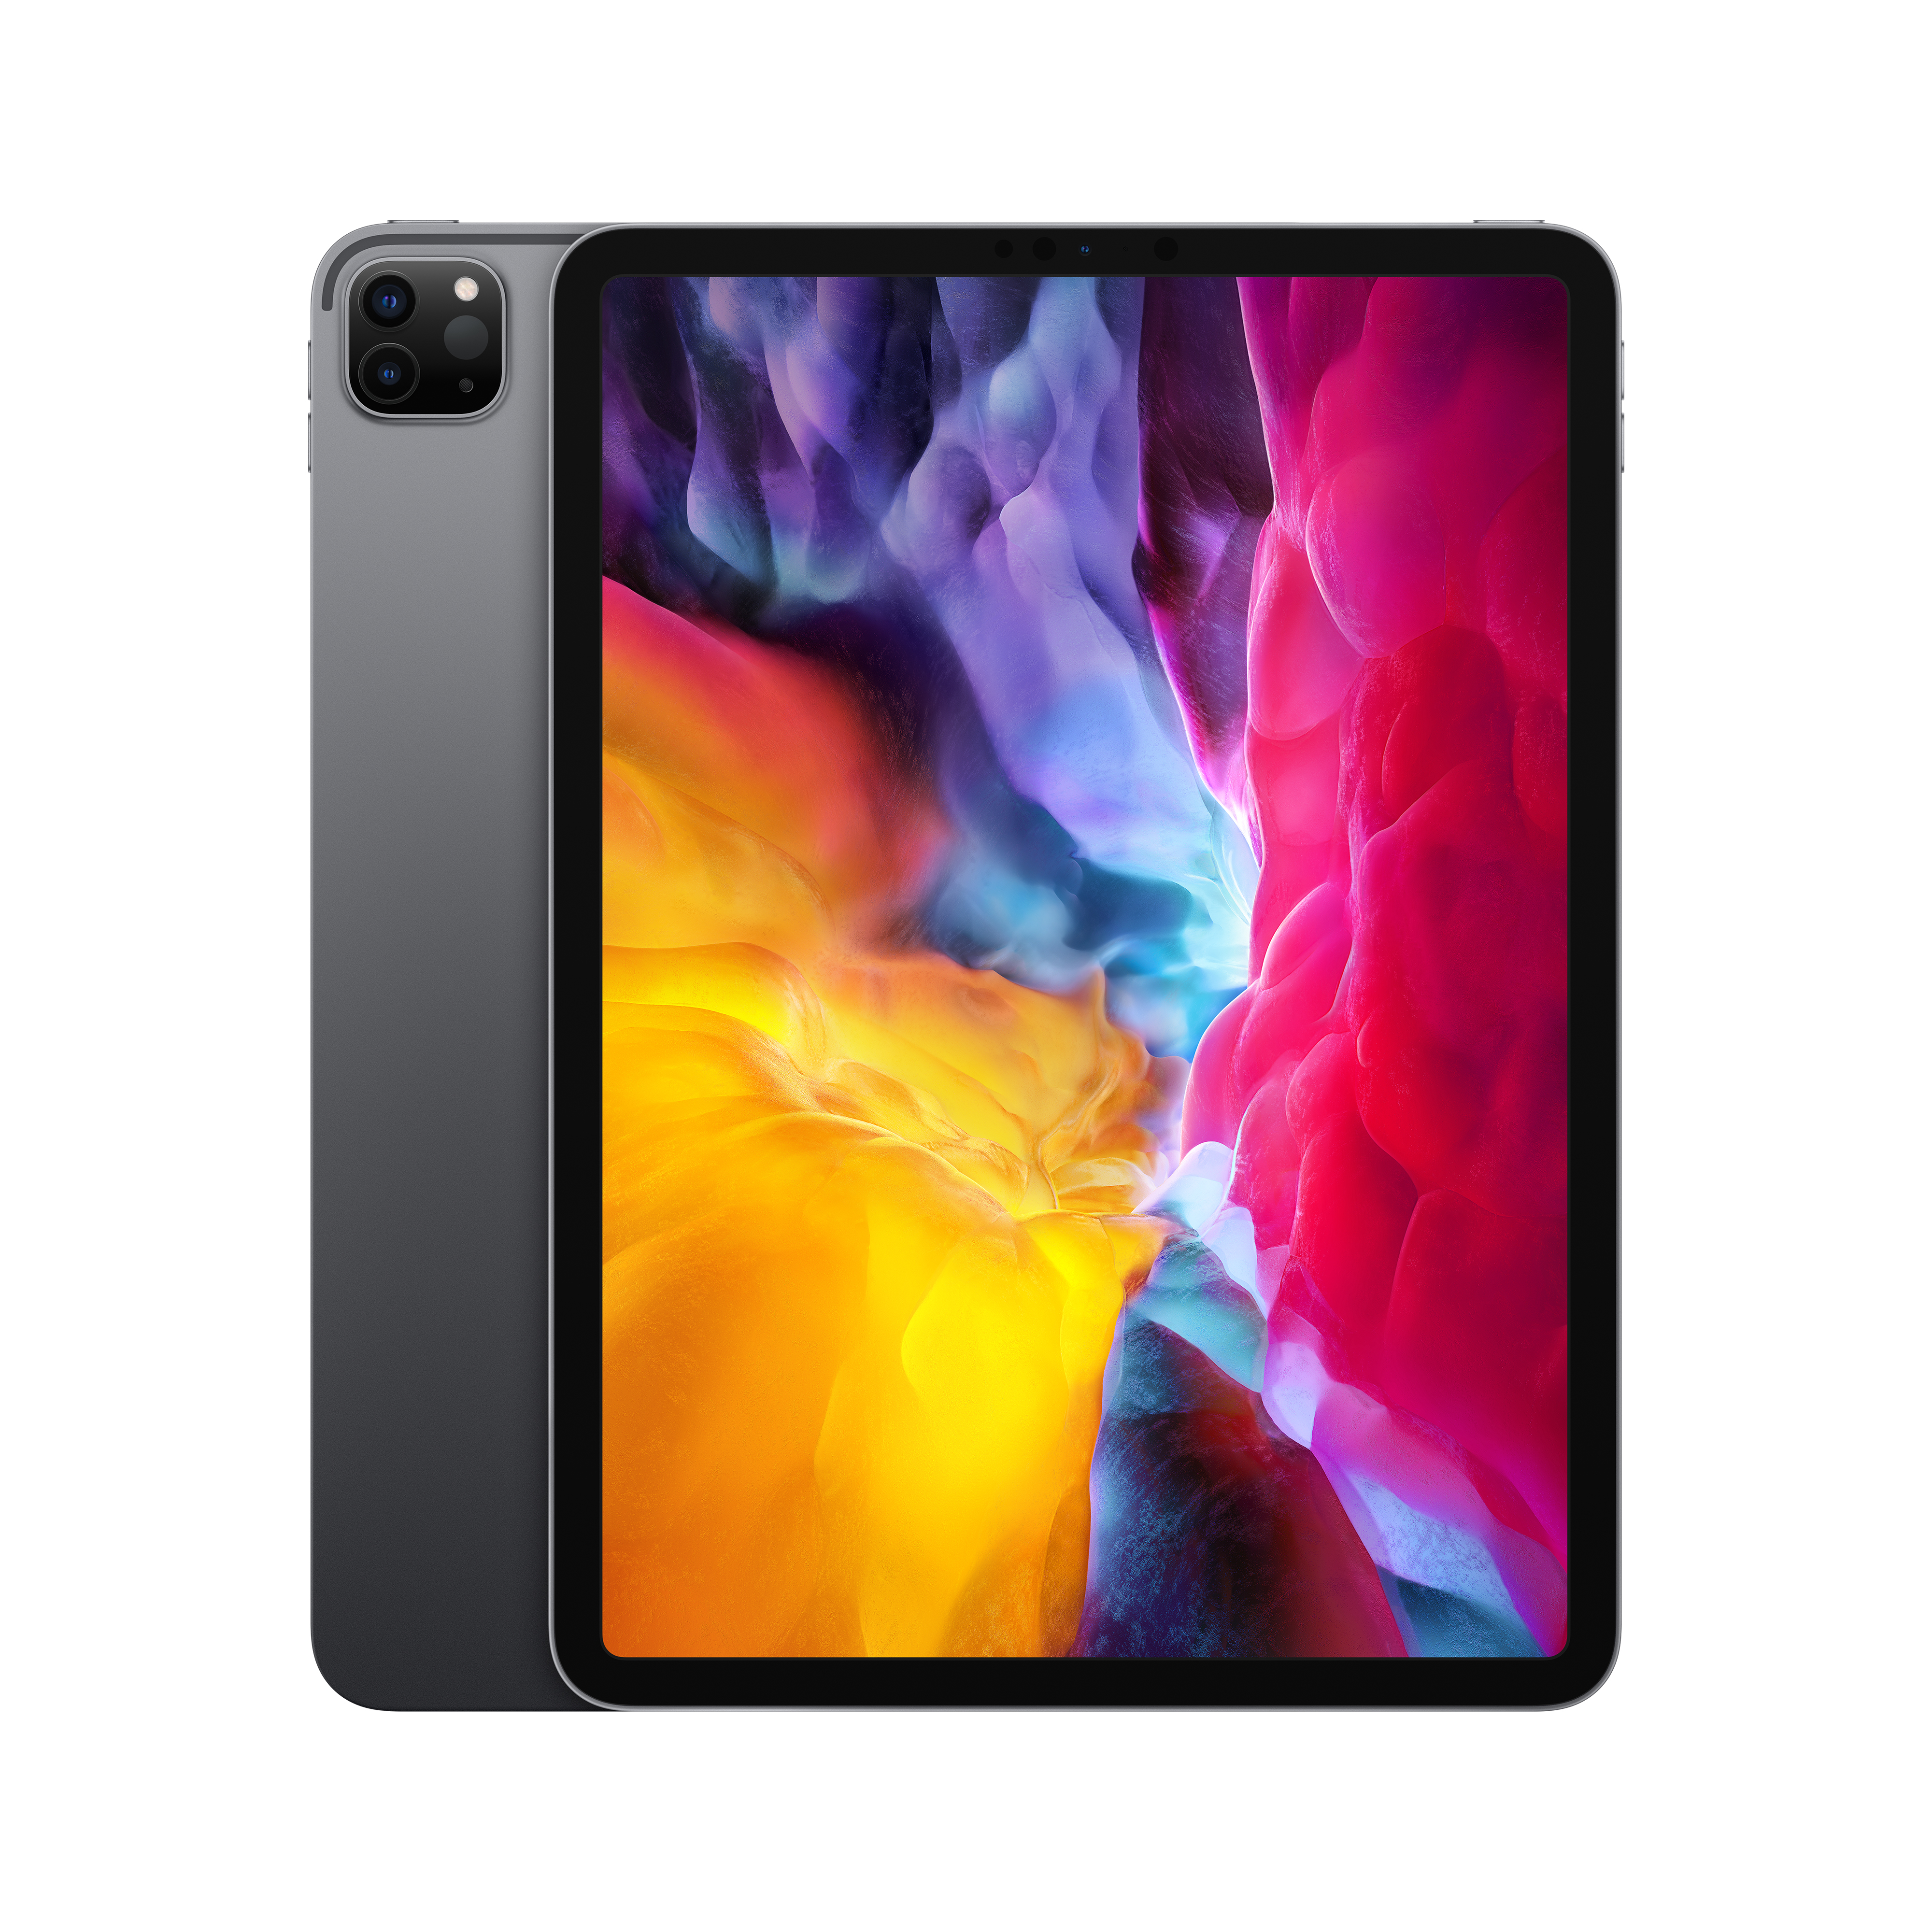 Apple 11-inch iPad Pro (2020) Wi-Fi 256GB - Space Gray - image 3 of 10